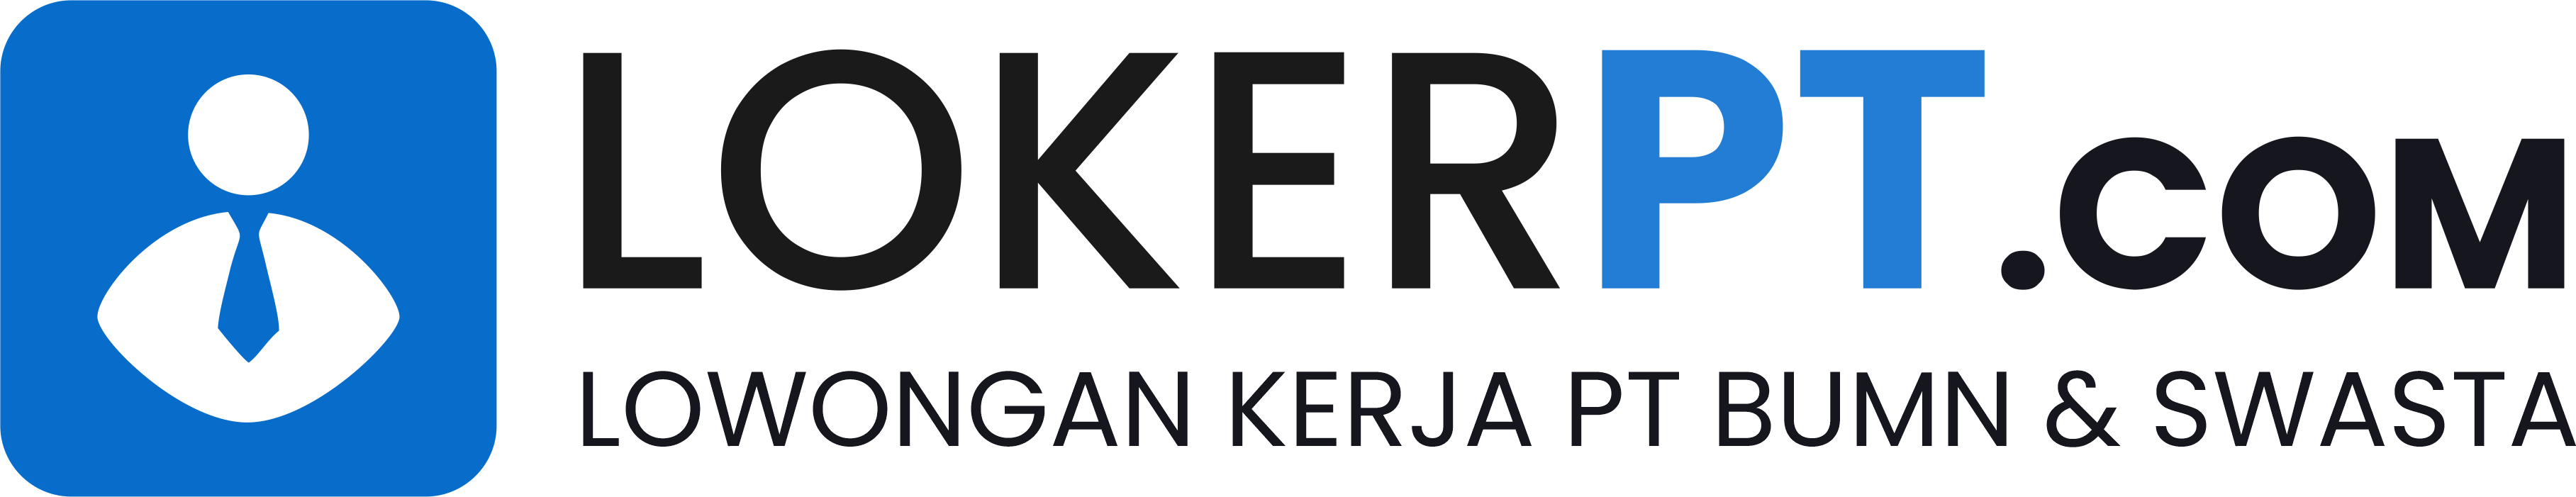 Logo Lokerpt